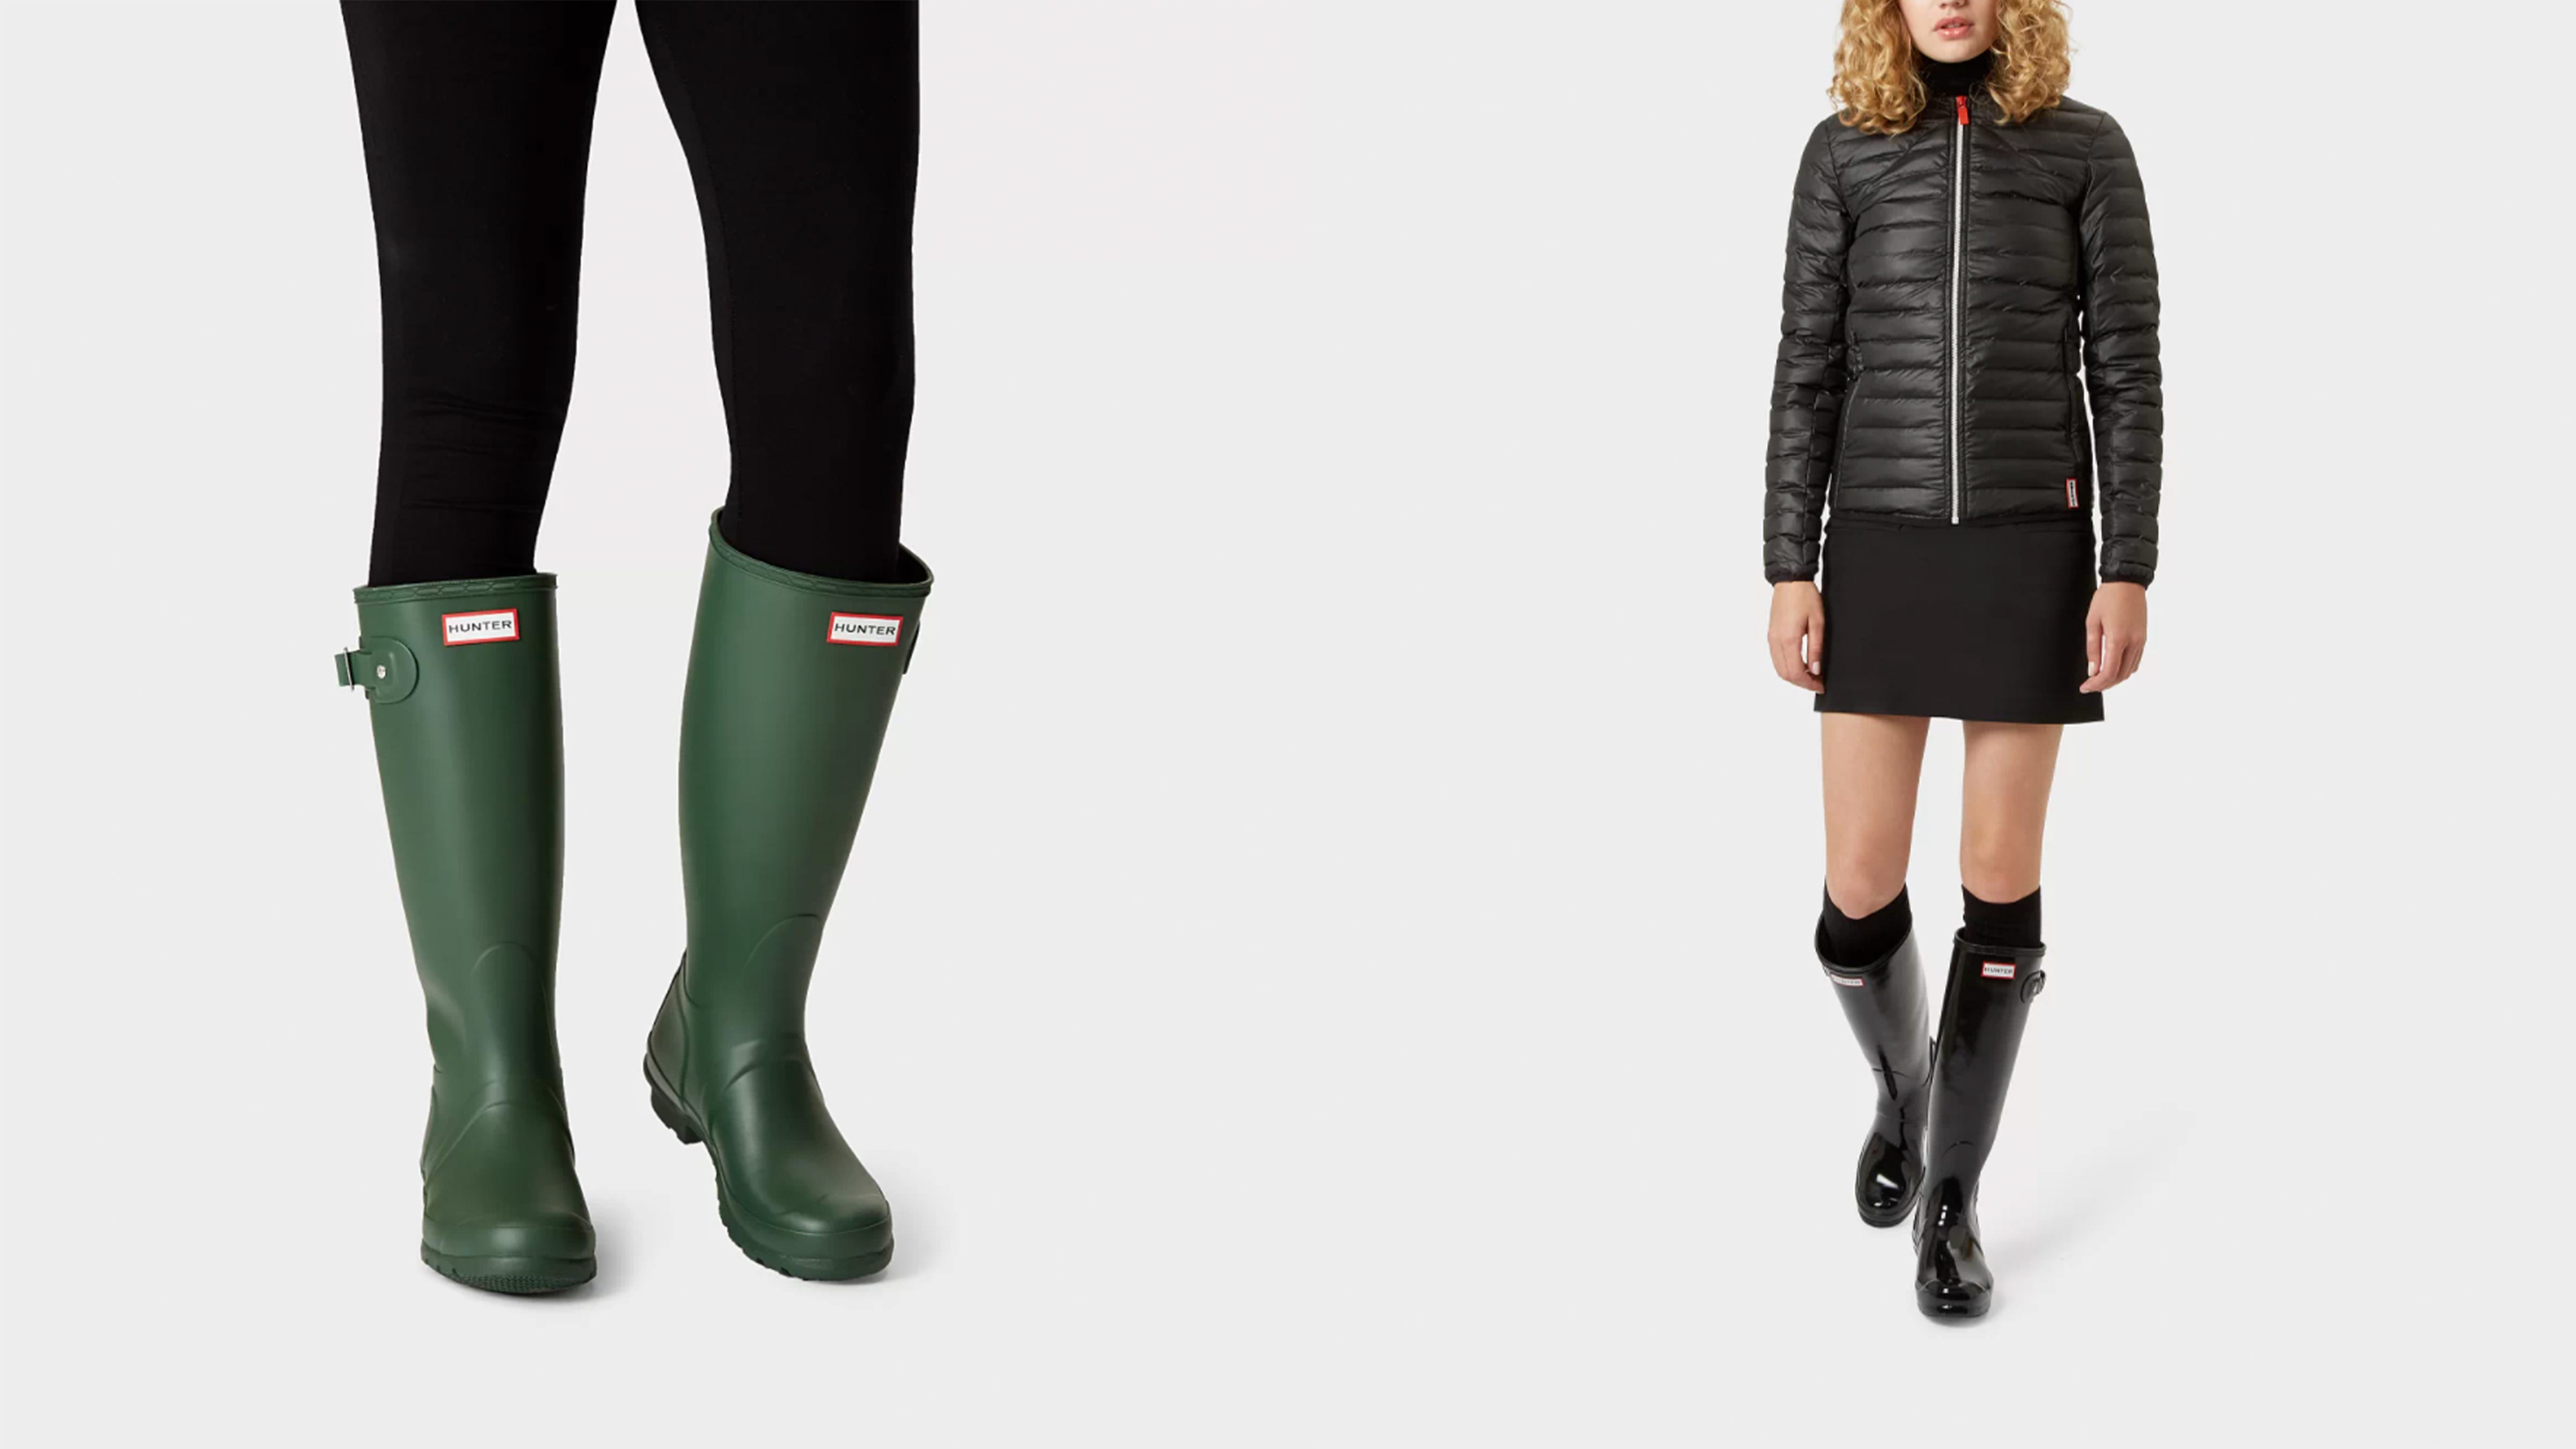 rain boots on sale